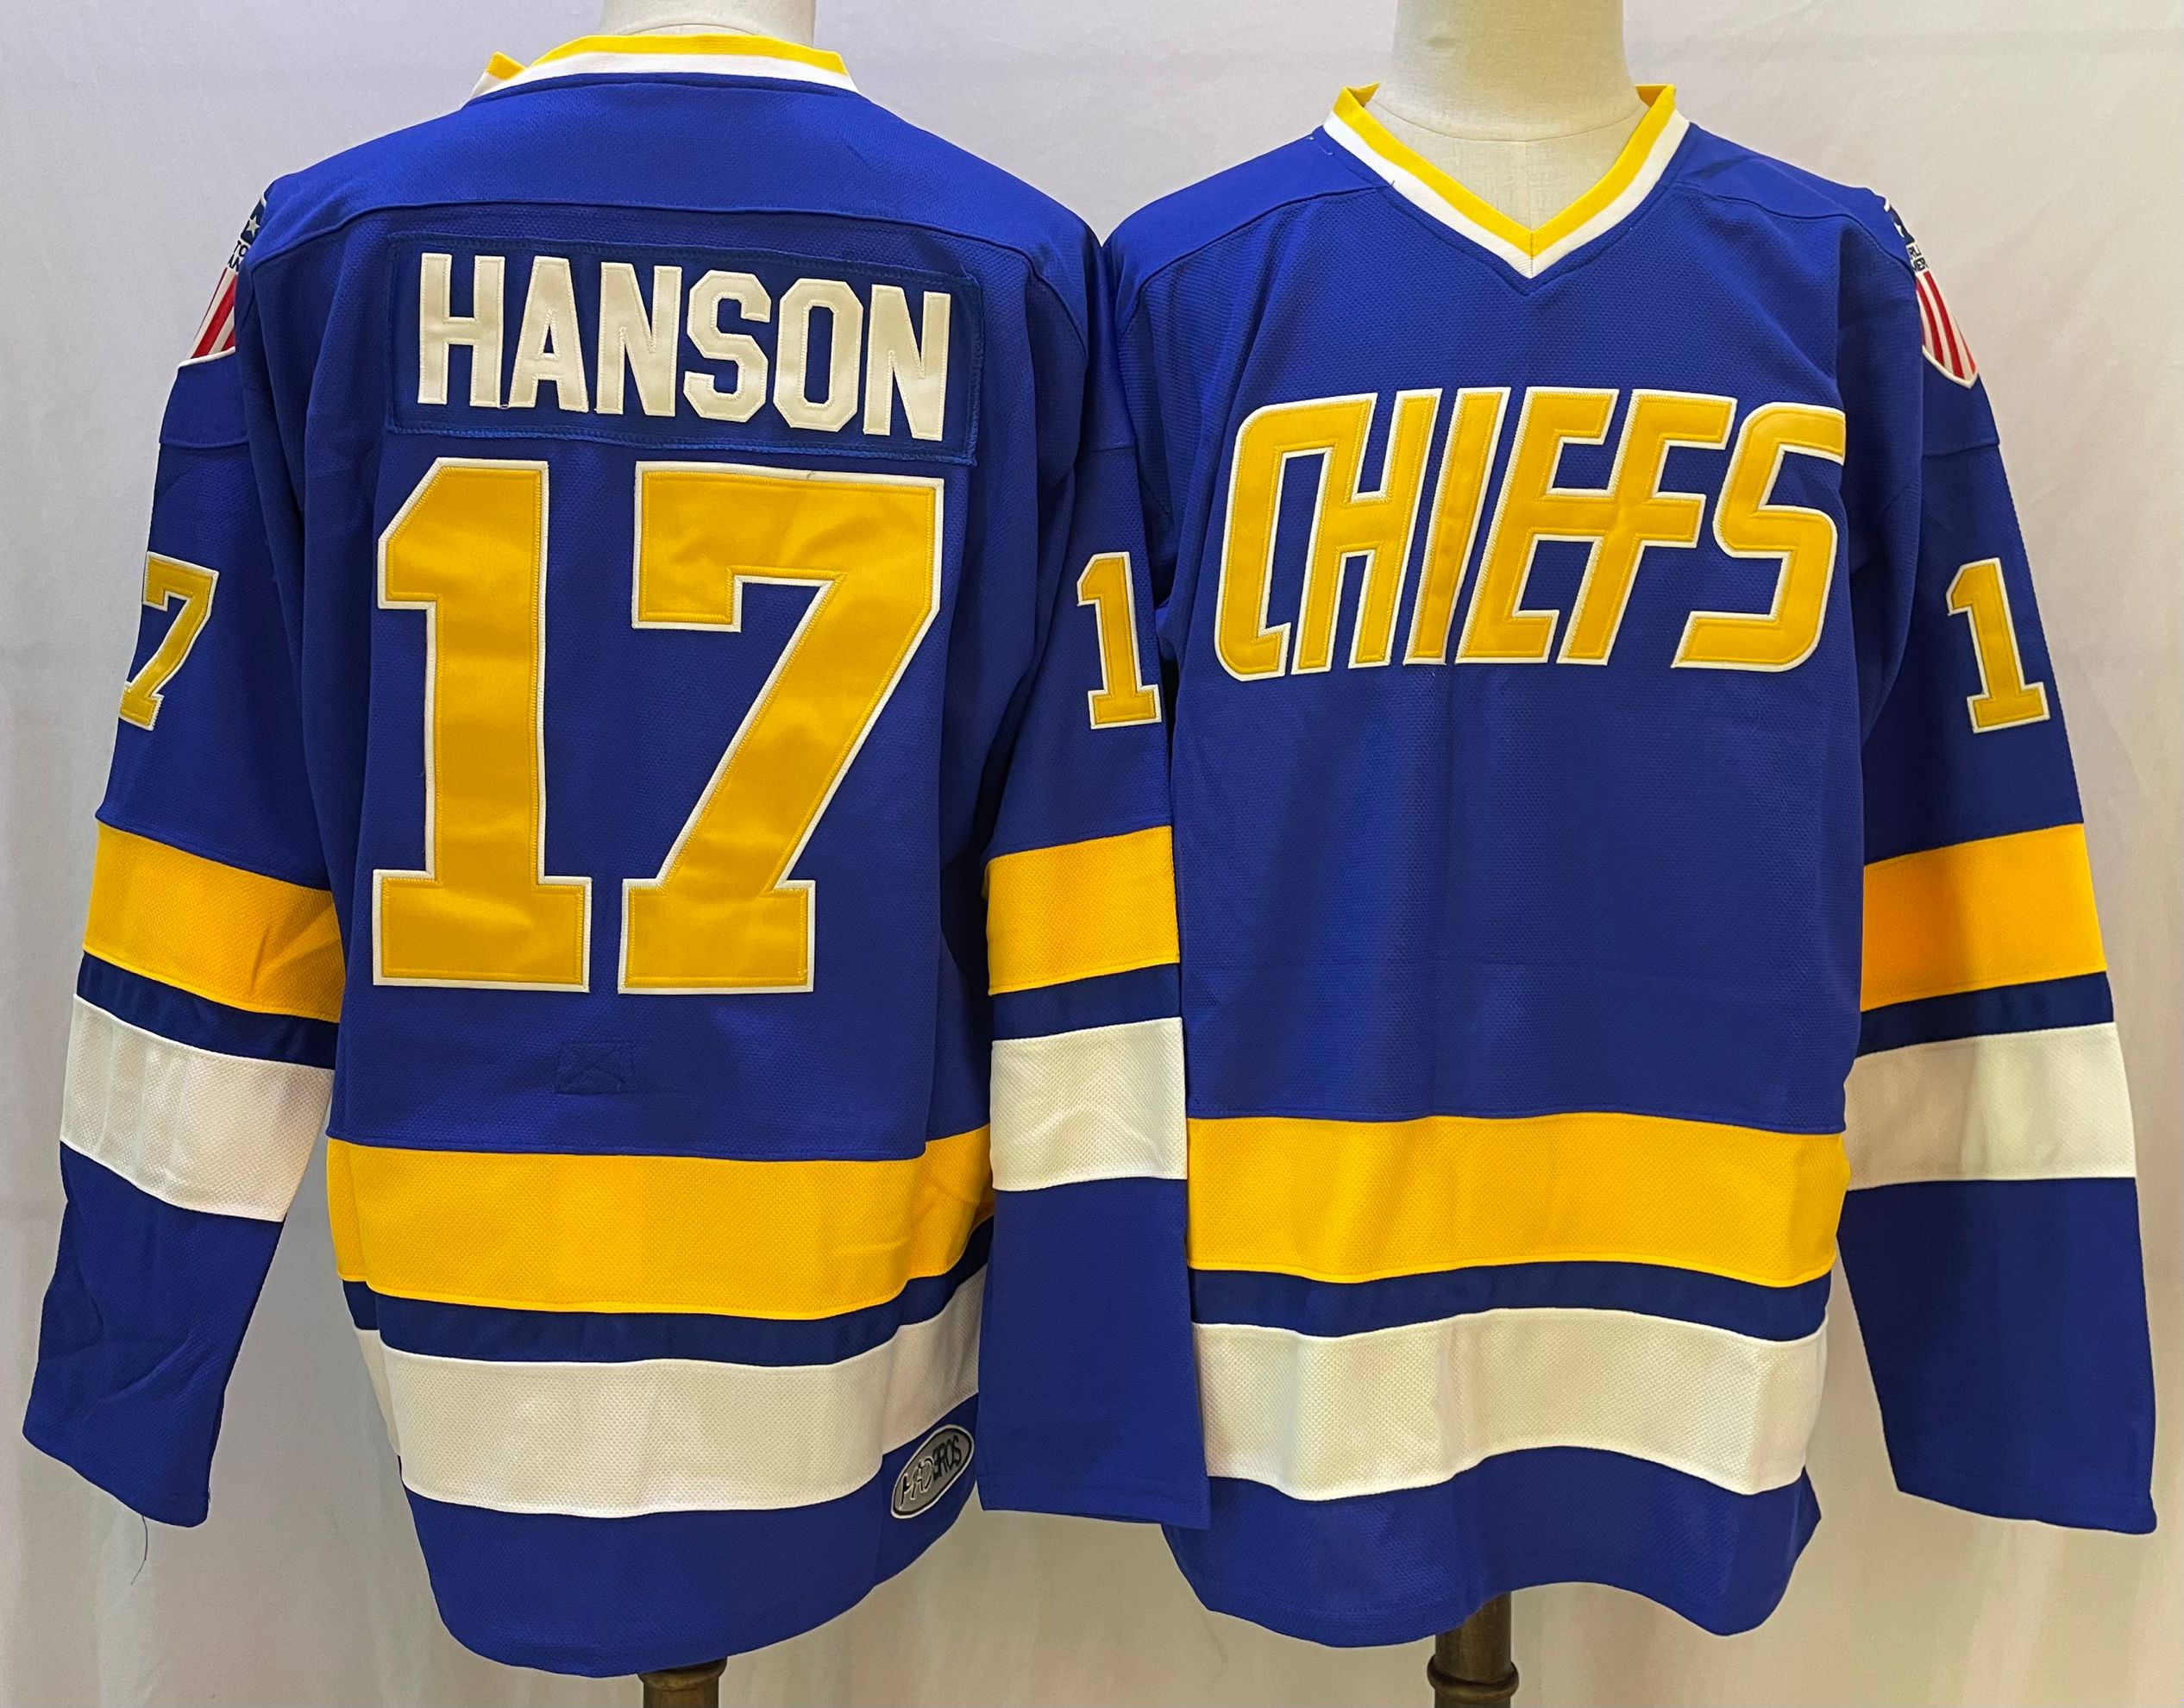 The NHL Movie Edtion #17 HANSON Blue Jersey